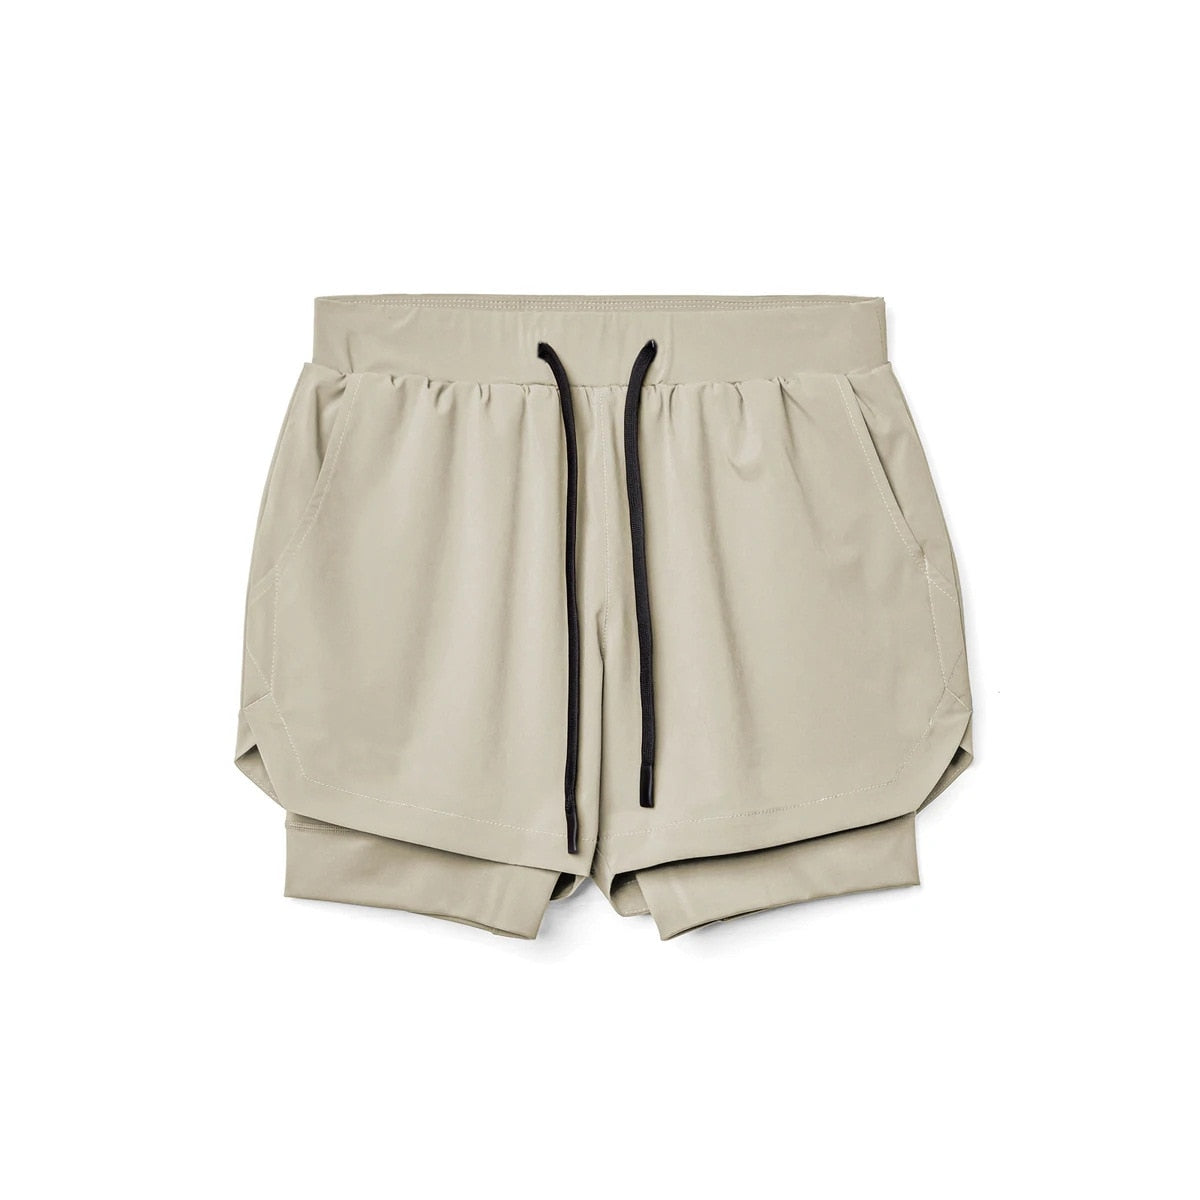 Comprar khaki Breathable Double layer sport shorts for Men